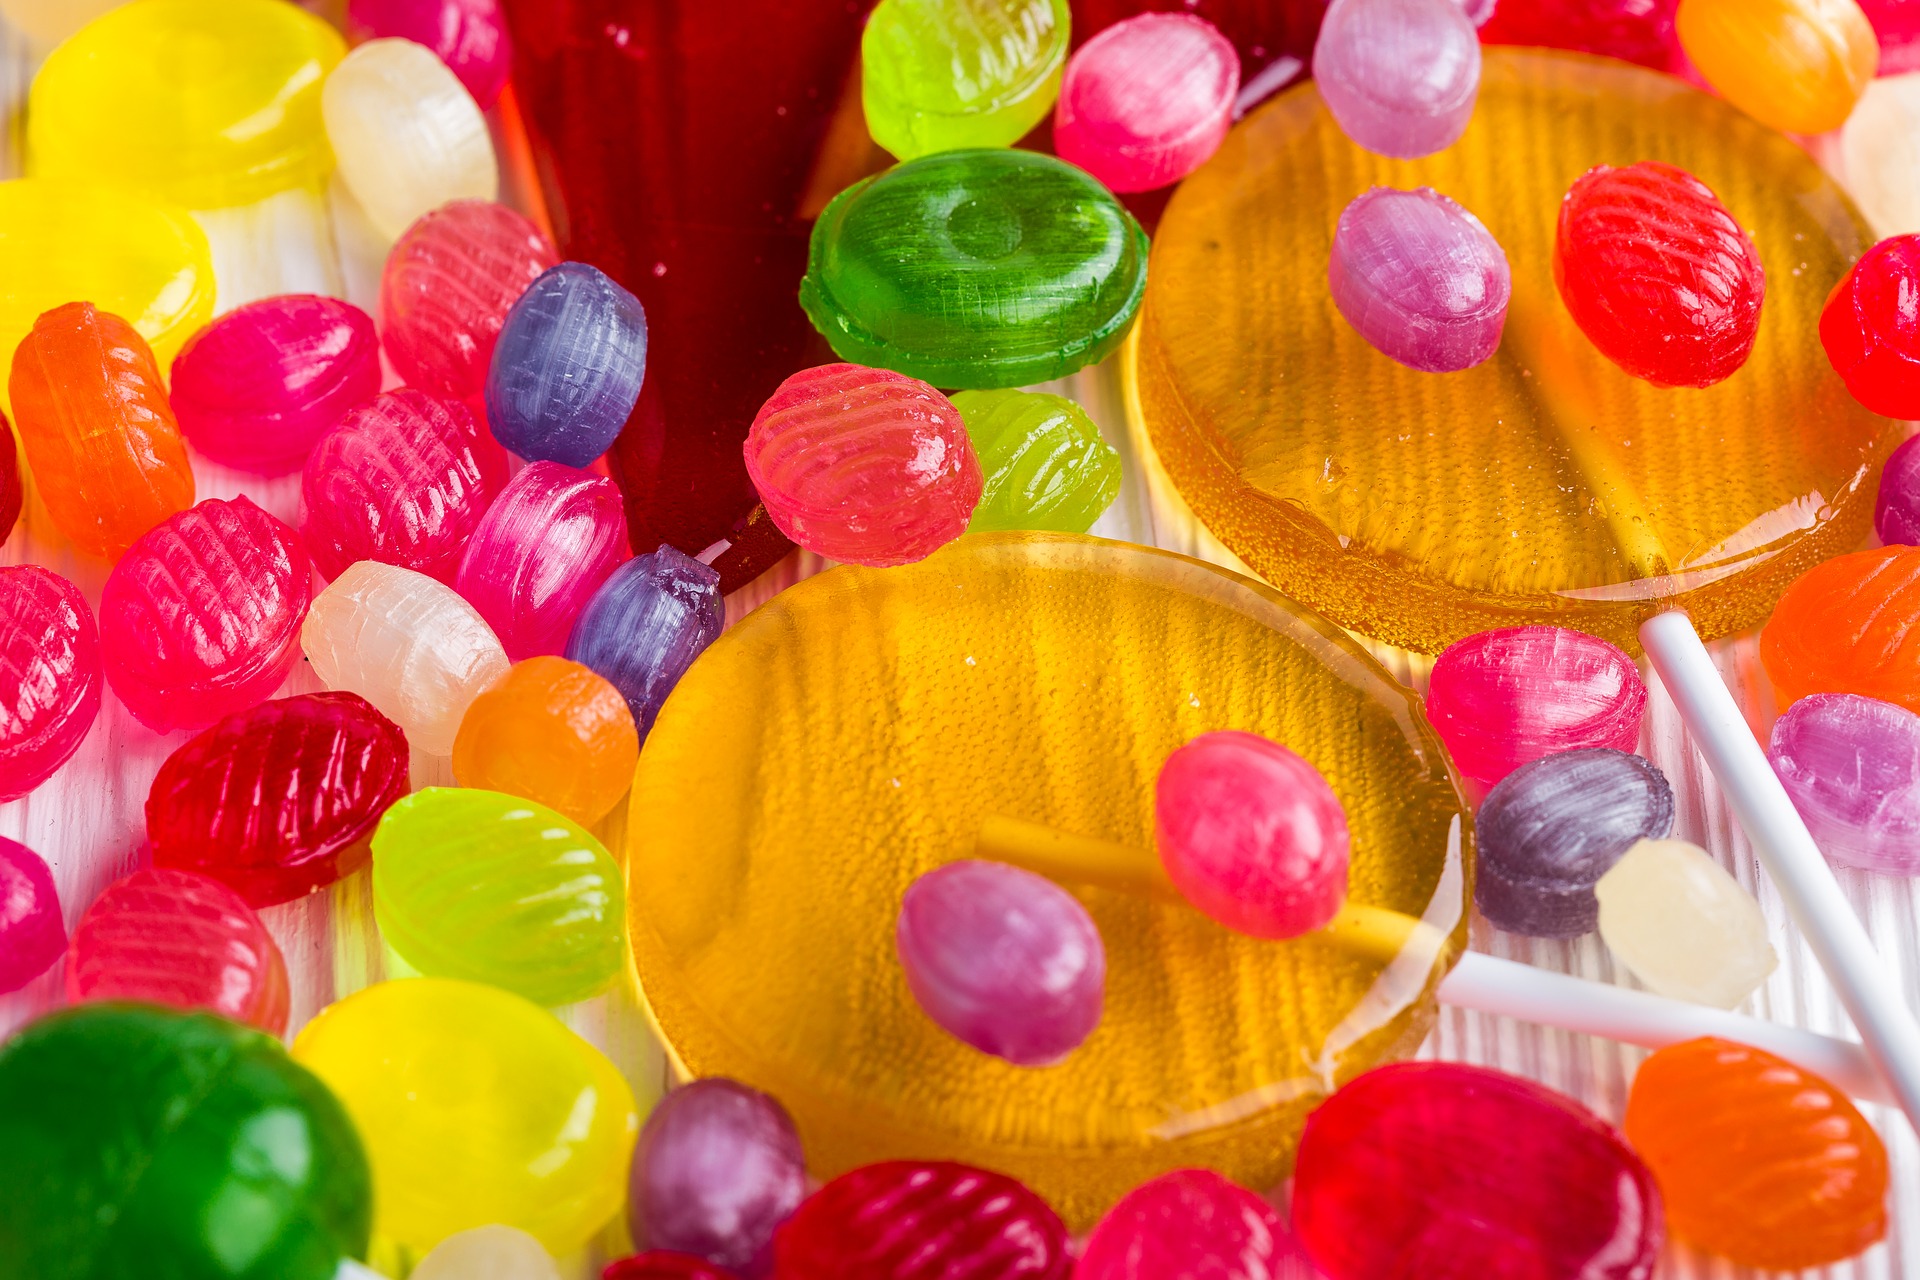 Hard candy and lollipops (source: Daria-Yakovleva, Pixabay)